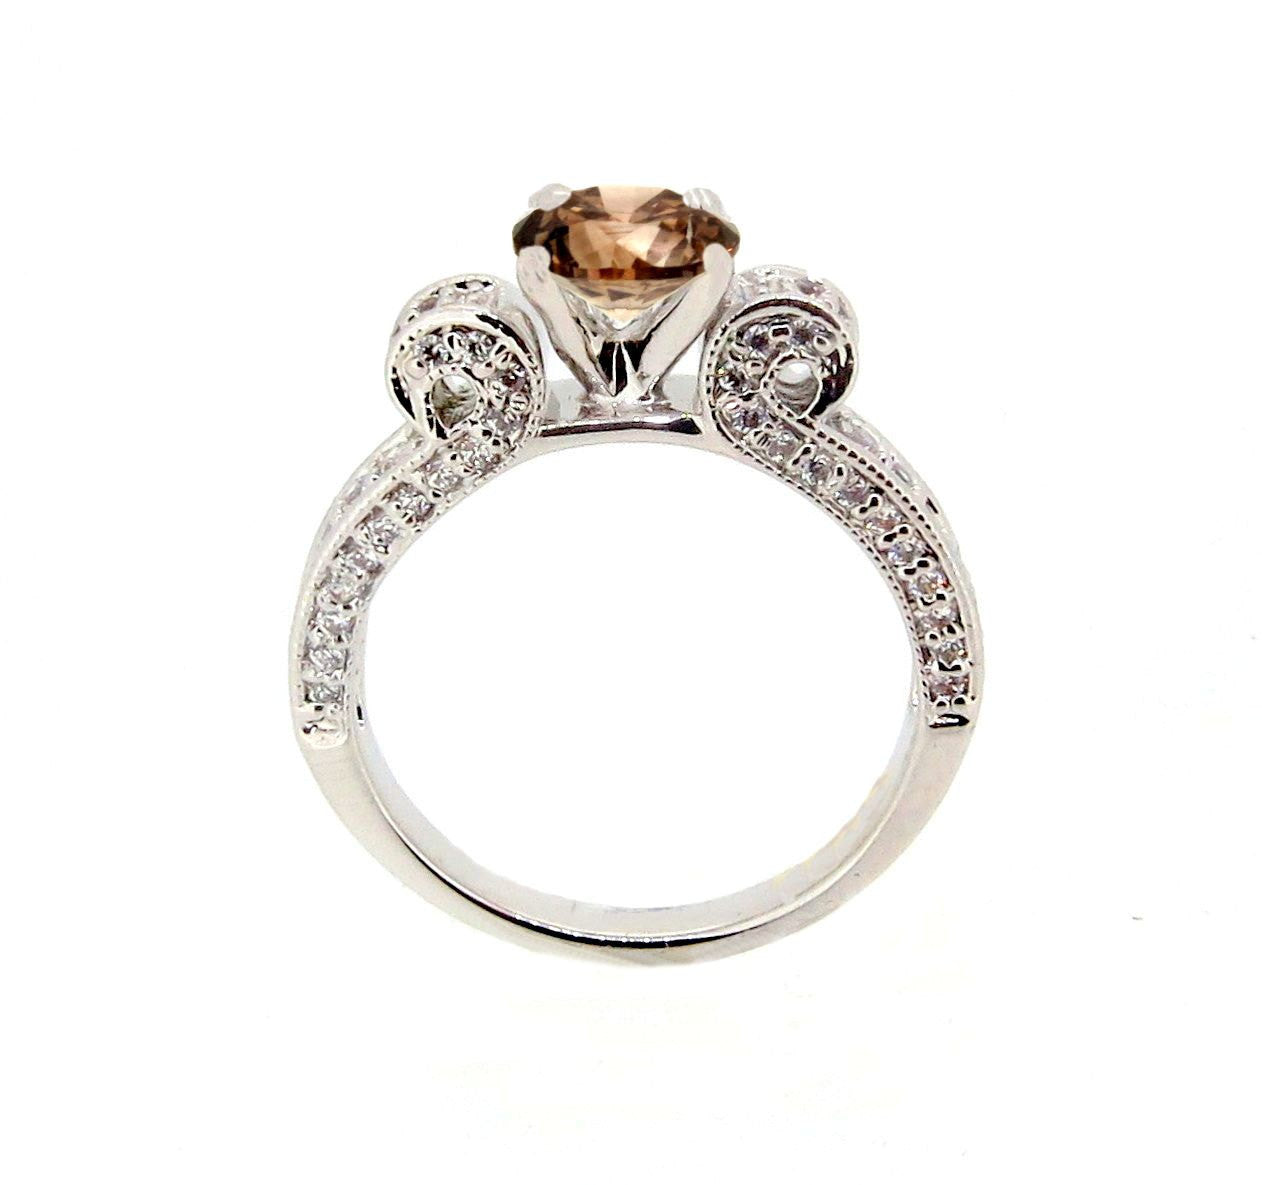 Unique Engagement Ring, 1 Carat Fancy Color Brown Diamond, Anniversary Ring - BD70582